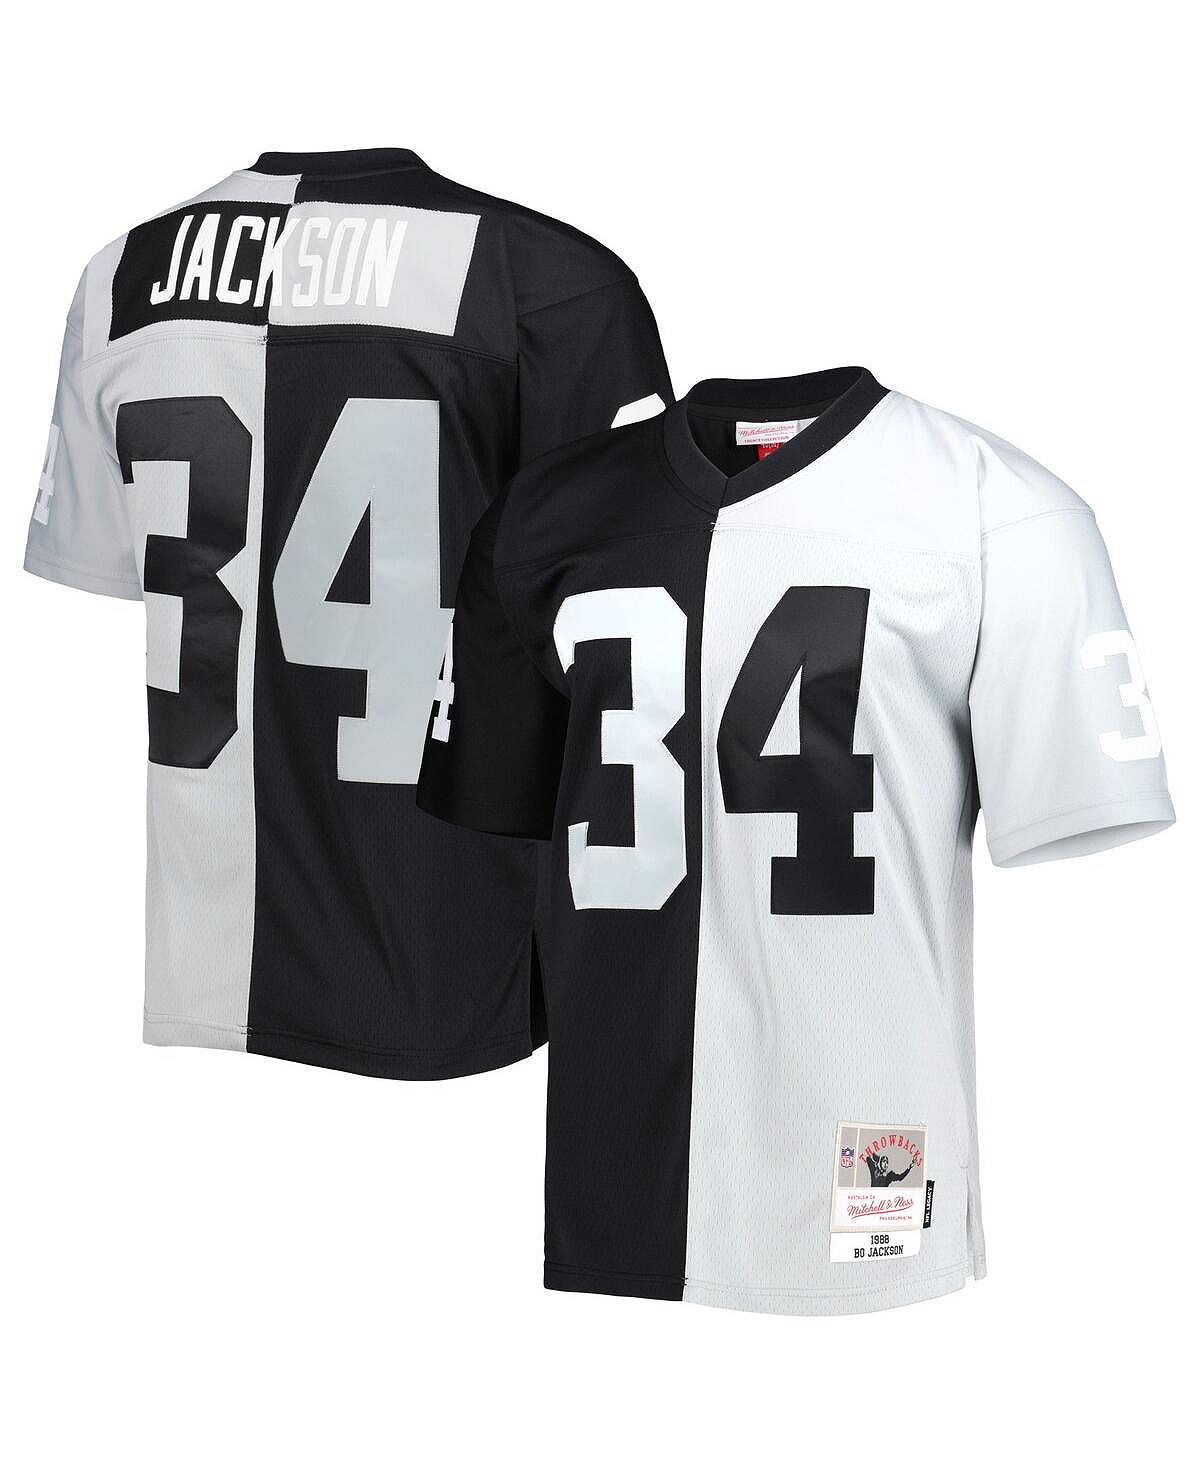 Футболка Mitchell & Ness bo jackson black and silver las vegas raiders 1988 split legacy, черный/белый